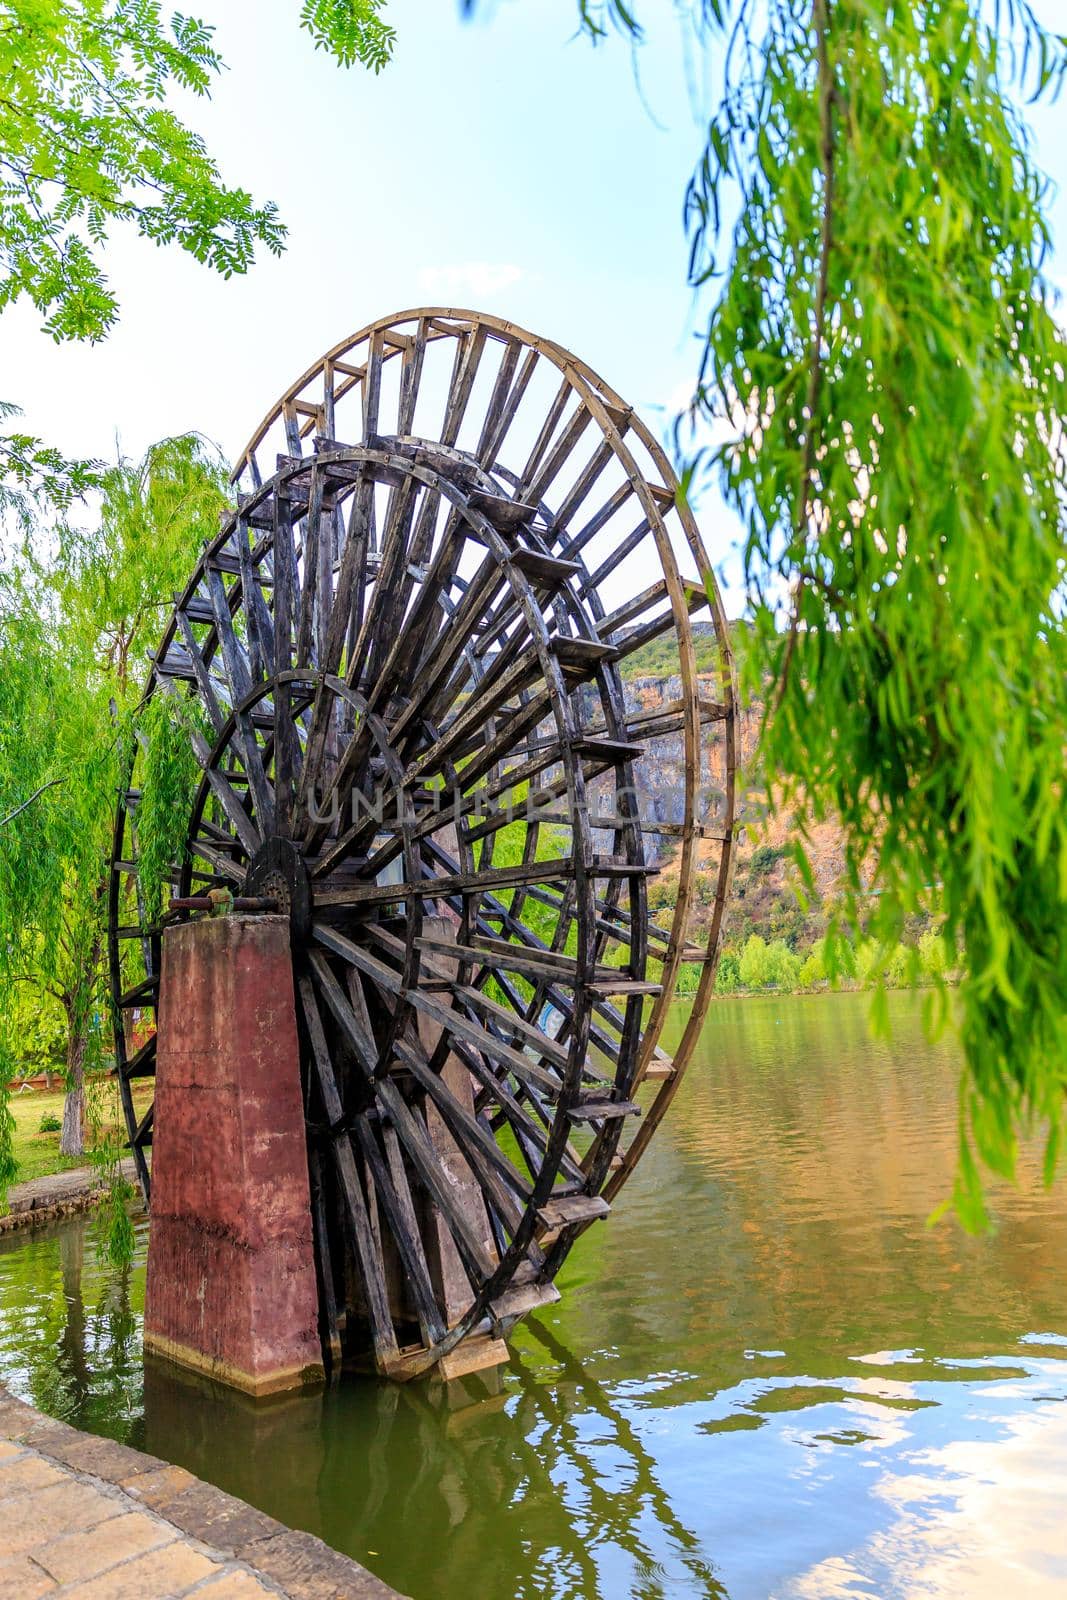 Ancient water wheel no longer in use, Yunnan province, China